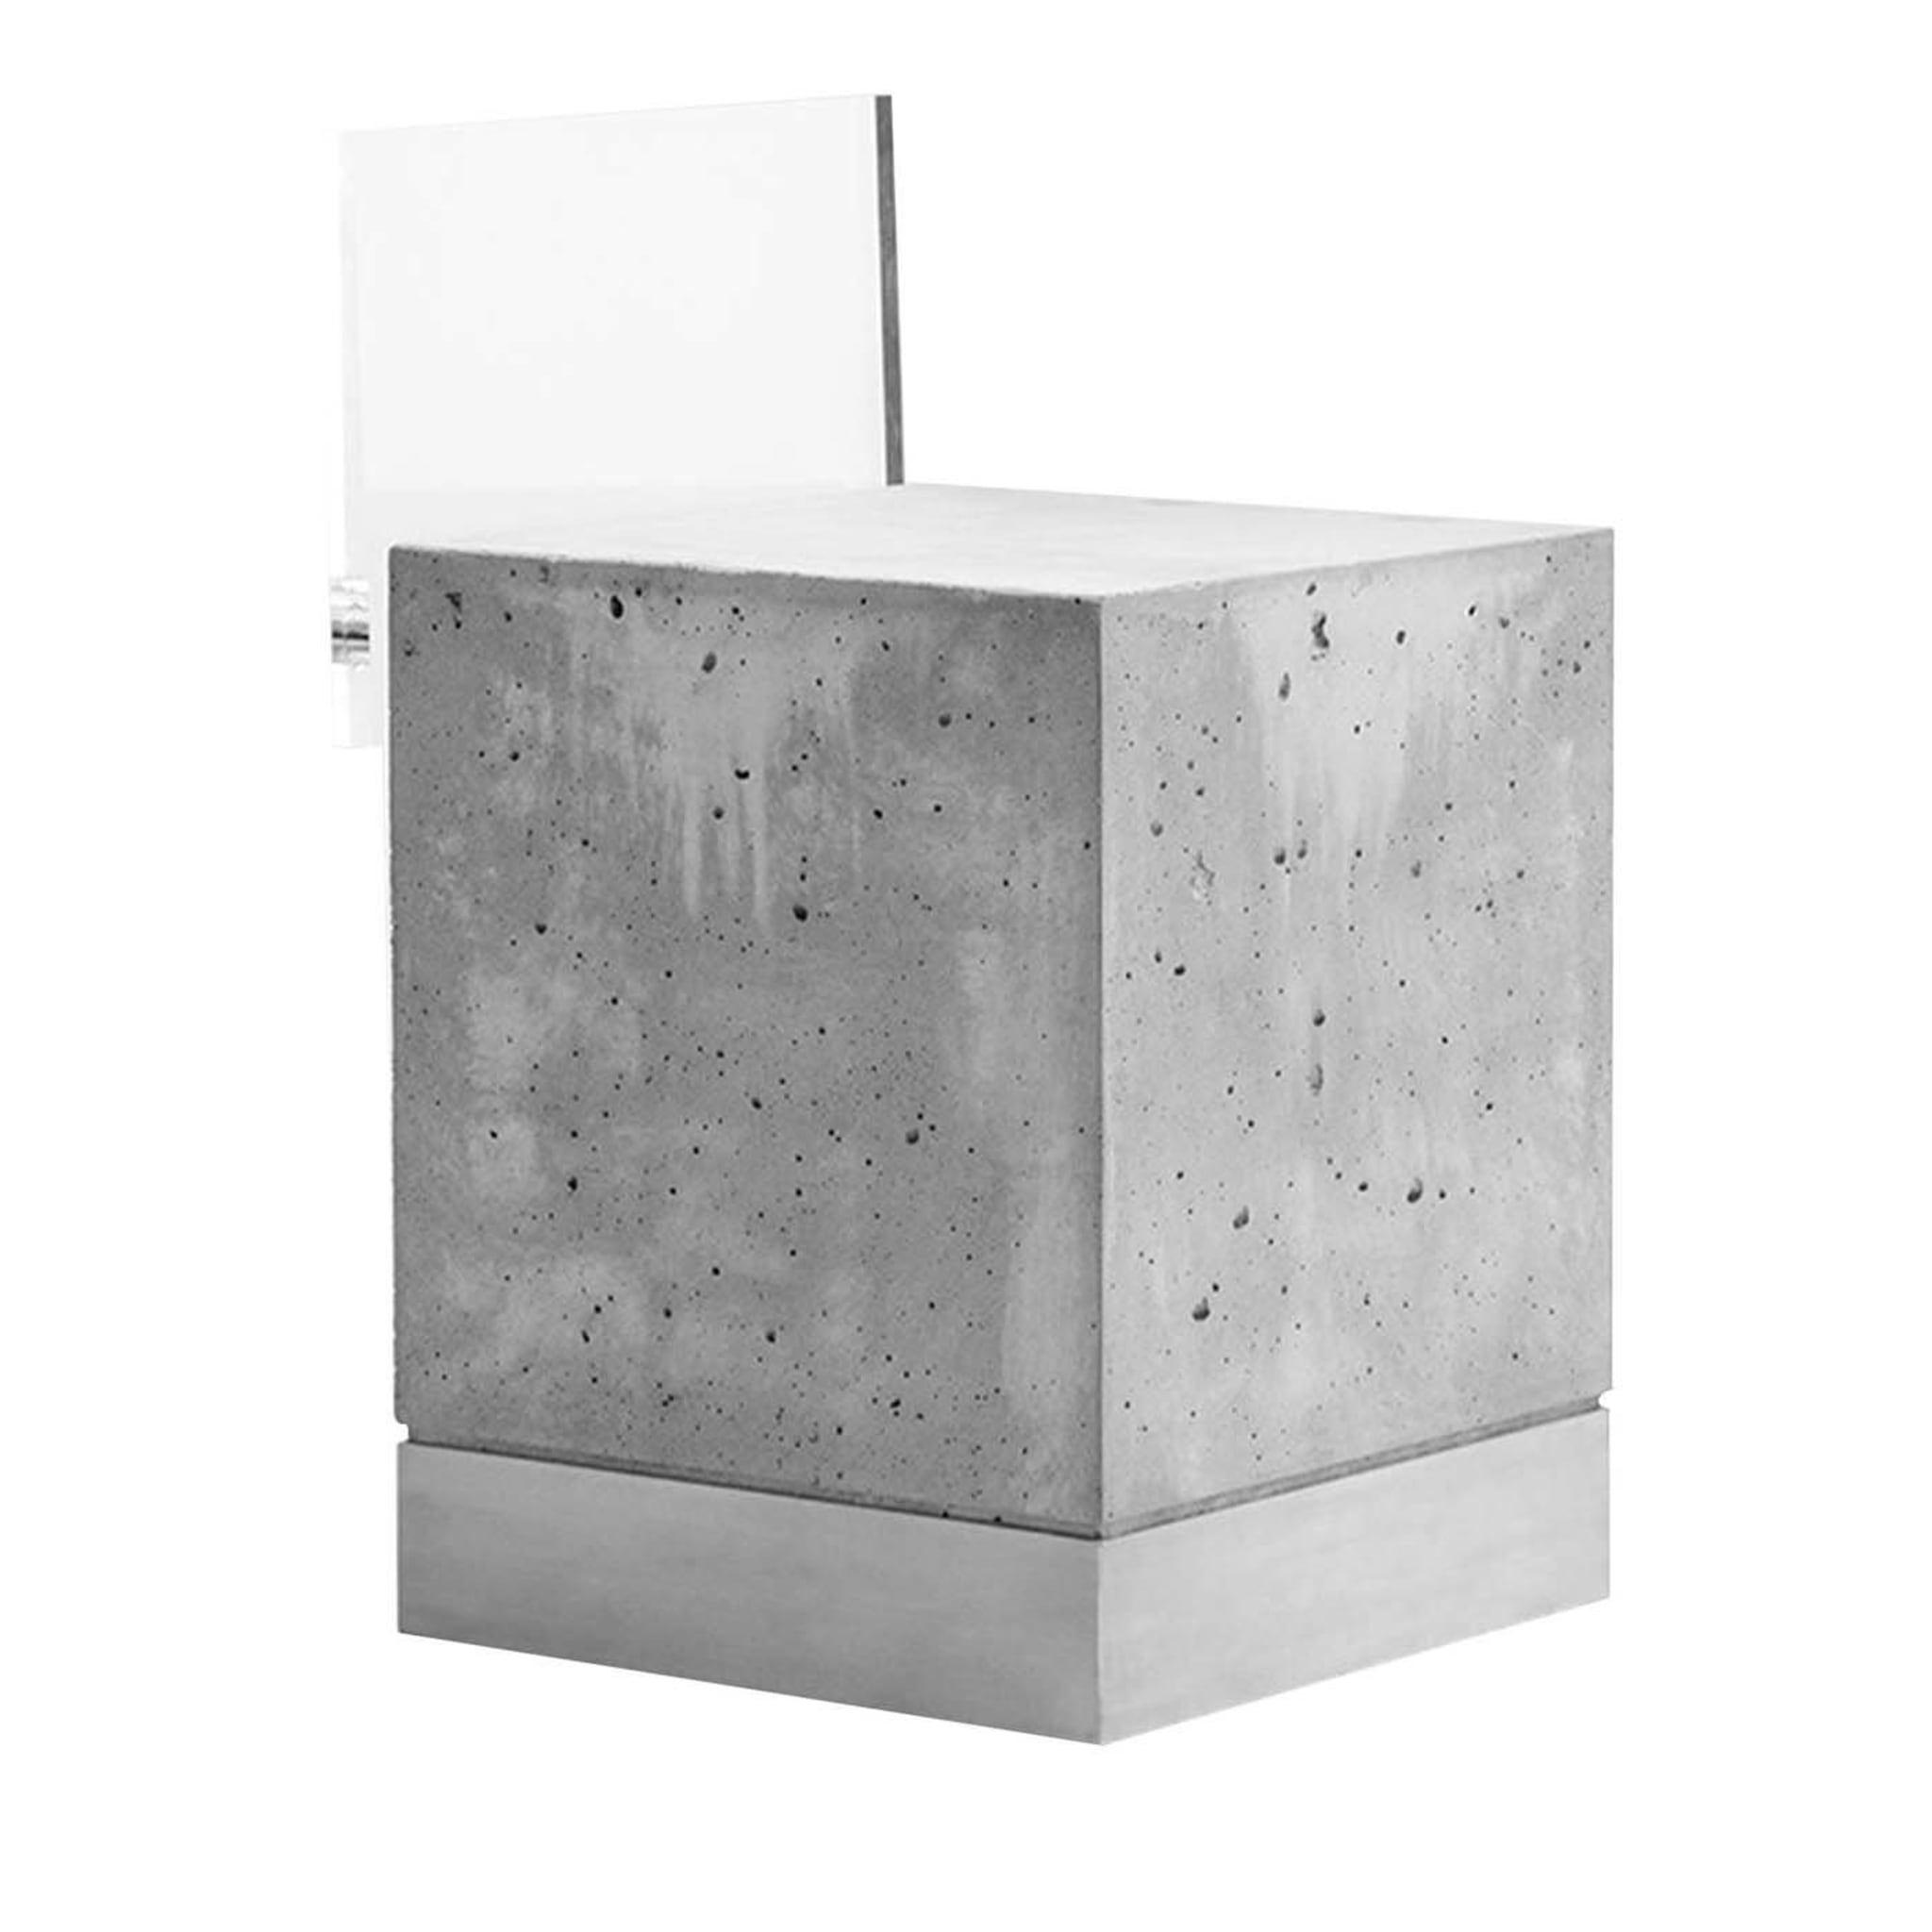 Techno-Beton-Stuhl von Dimoremilano - Hauptansicht